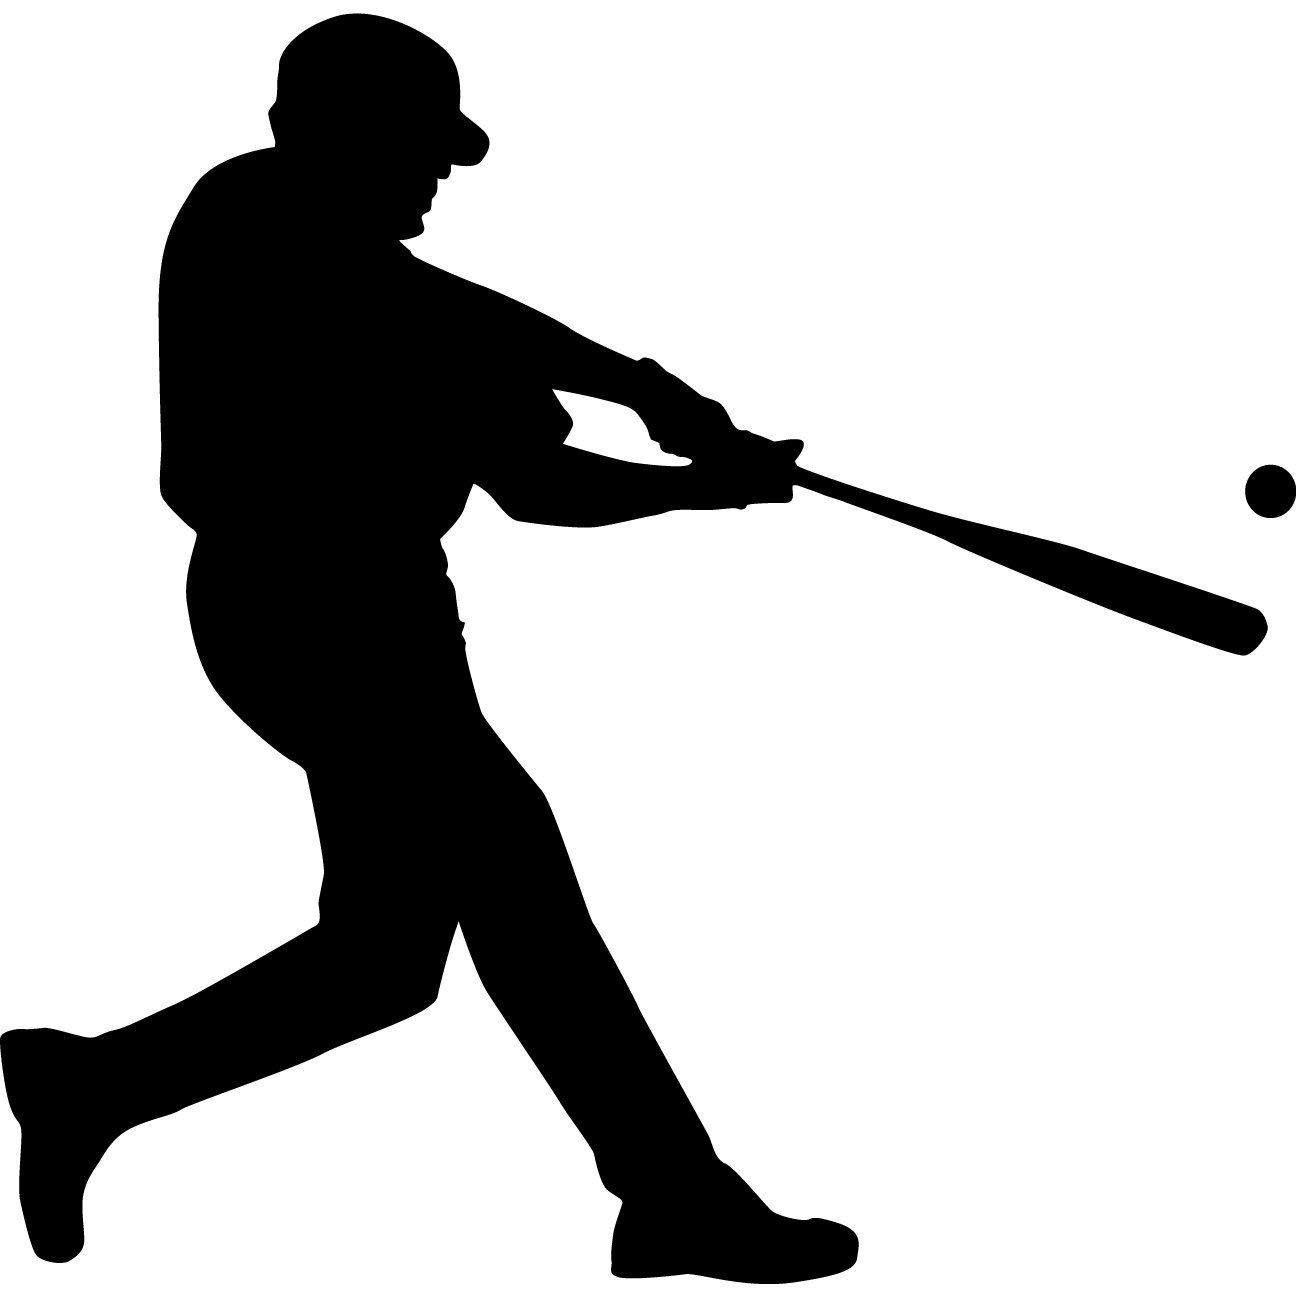 Baseball Player Silhouette Clip Art Image​